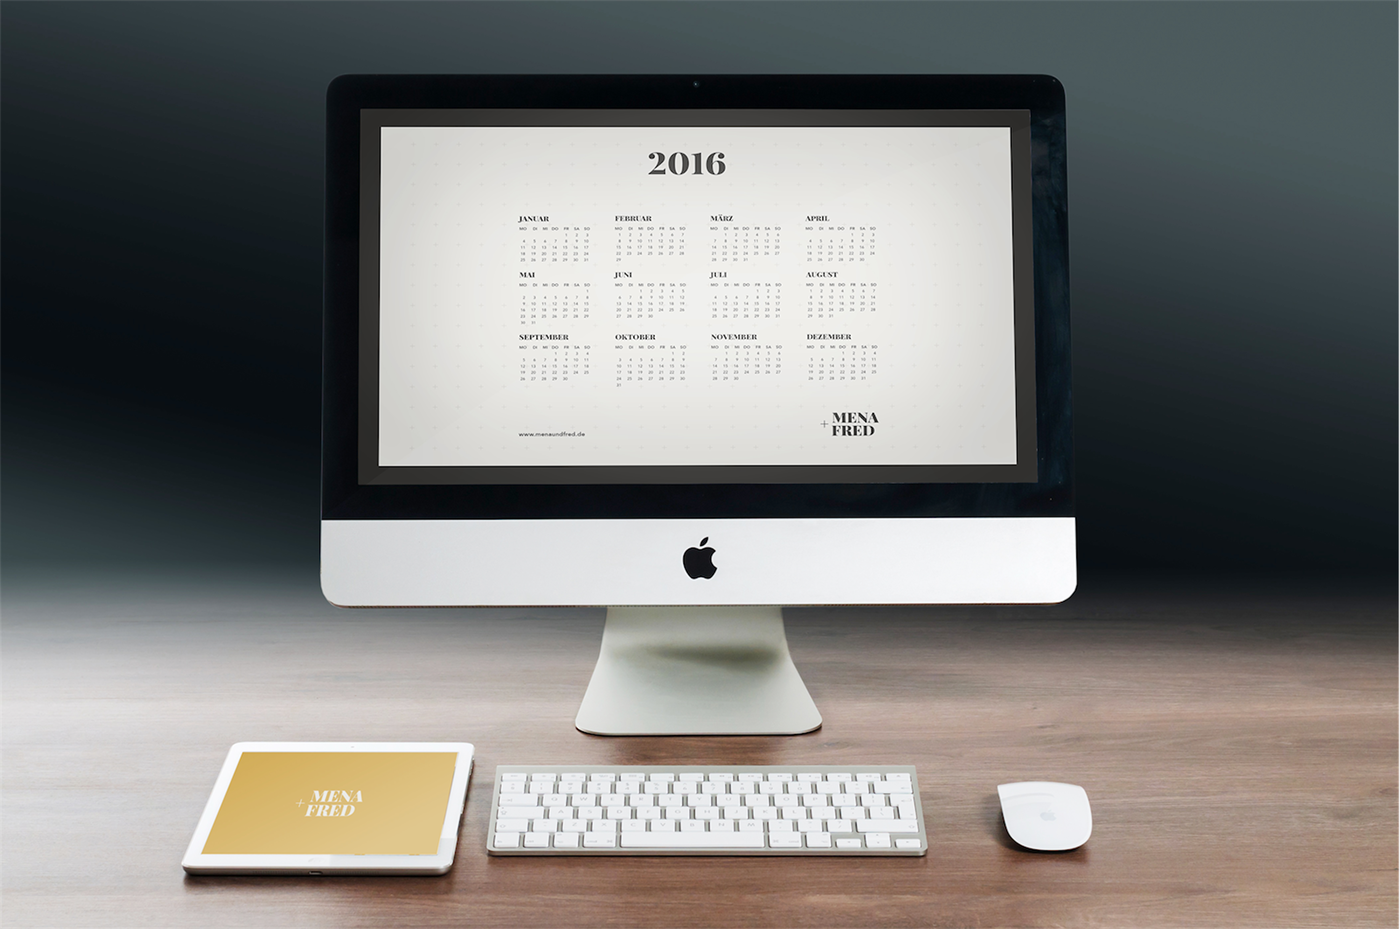 calendar freebie free download wallpaper screen iMac Mockup mena+fred germany